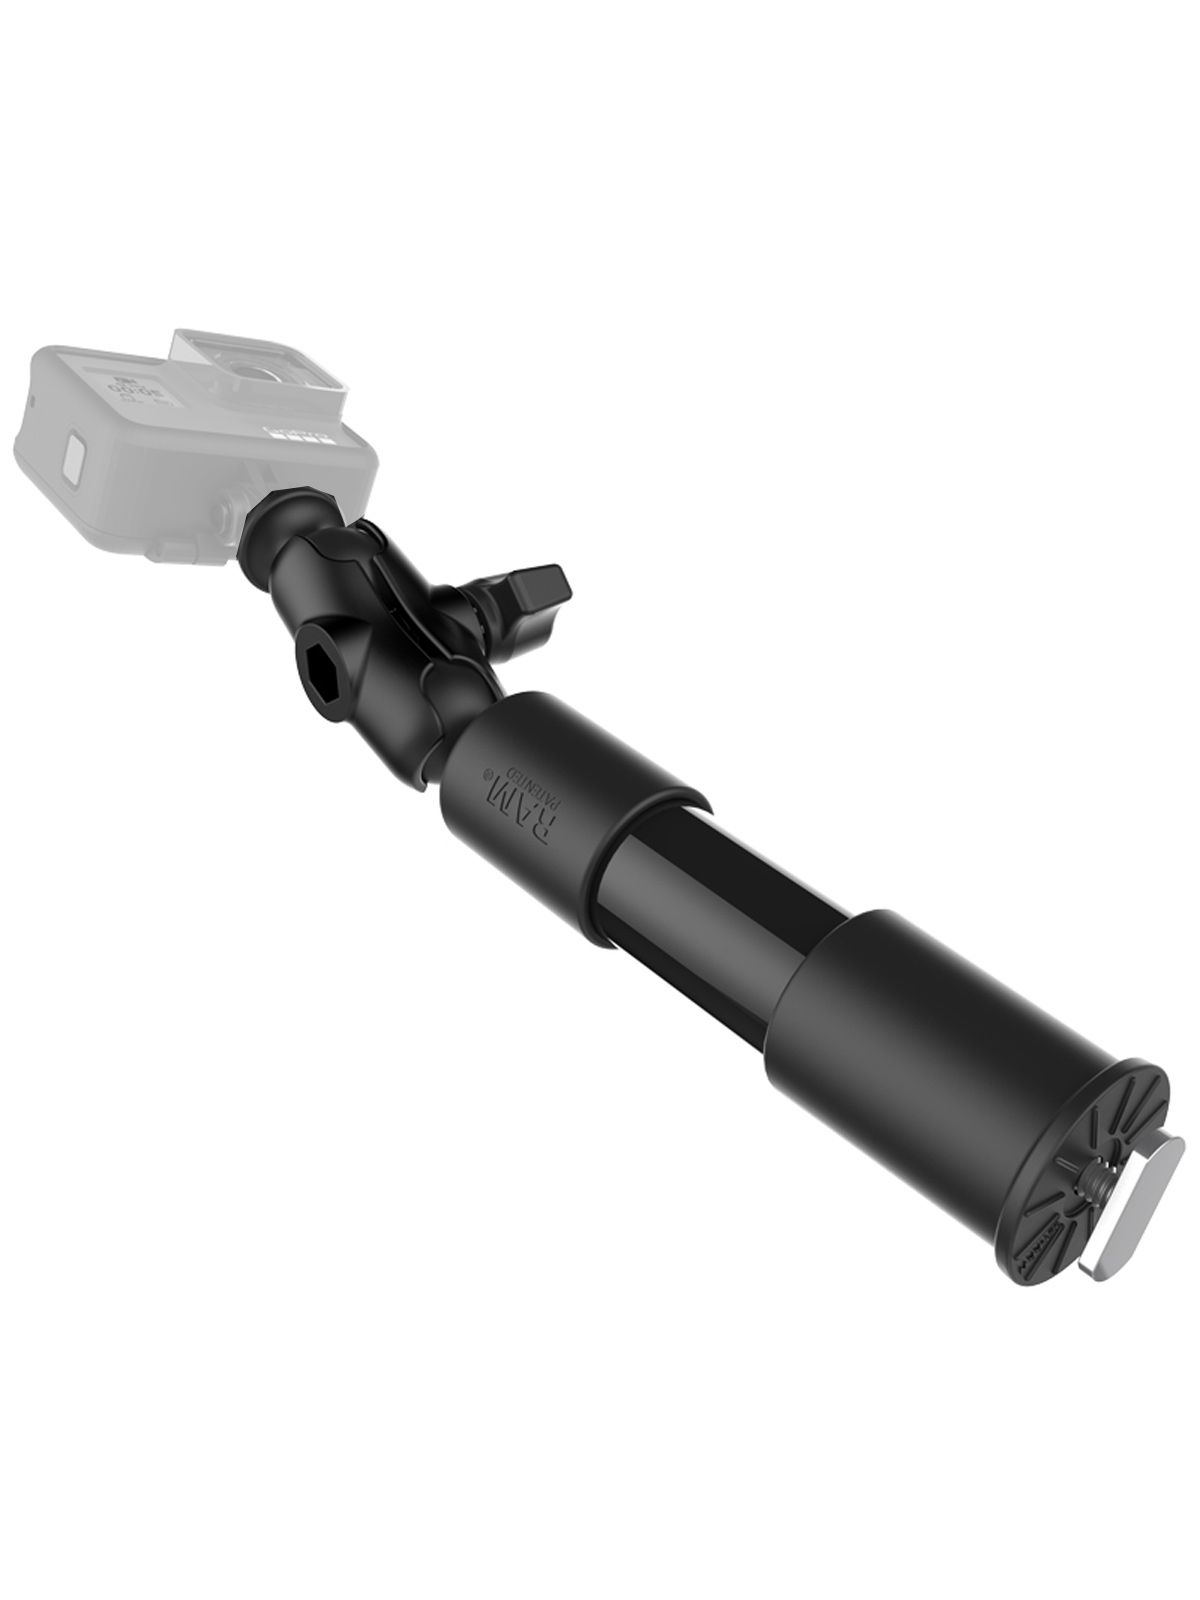 RAM Mounts Verbundstoff Kameraarm für GoPro Action Kameras - mit Arm (4 Zoll), GoPro-Adapter, B-Kugel (1 Zoll)